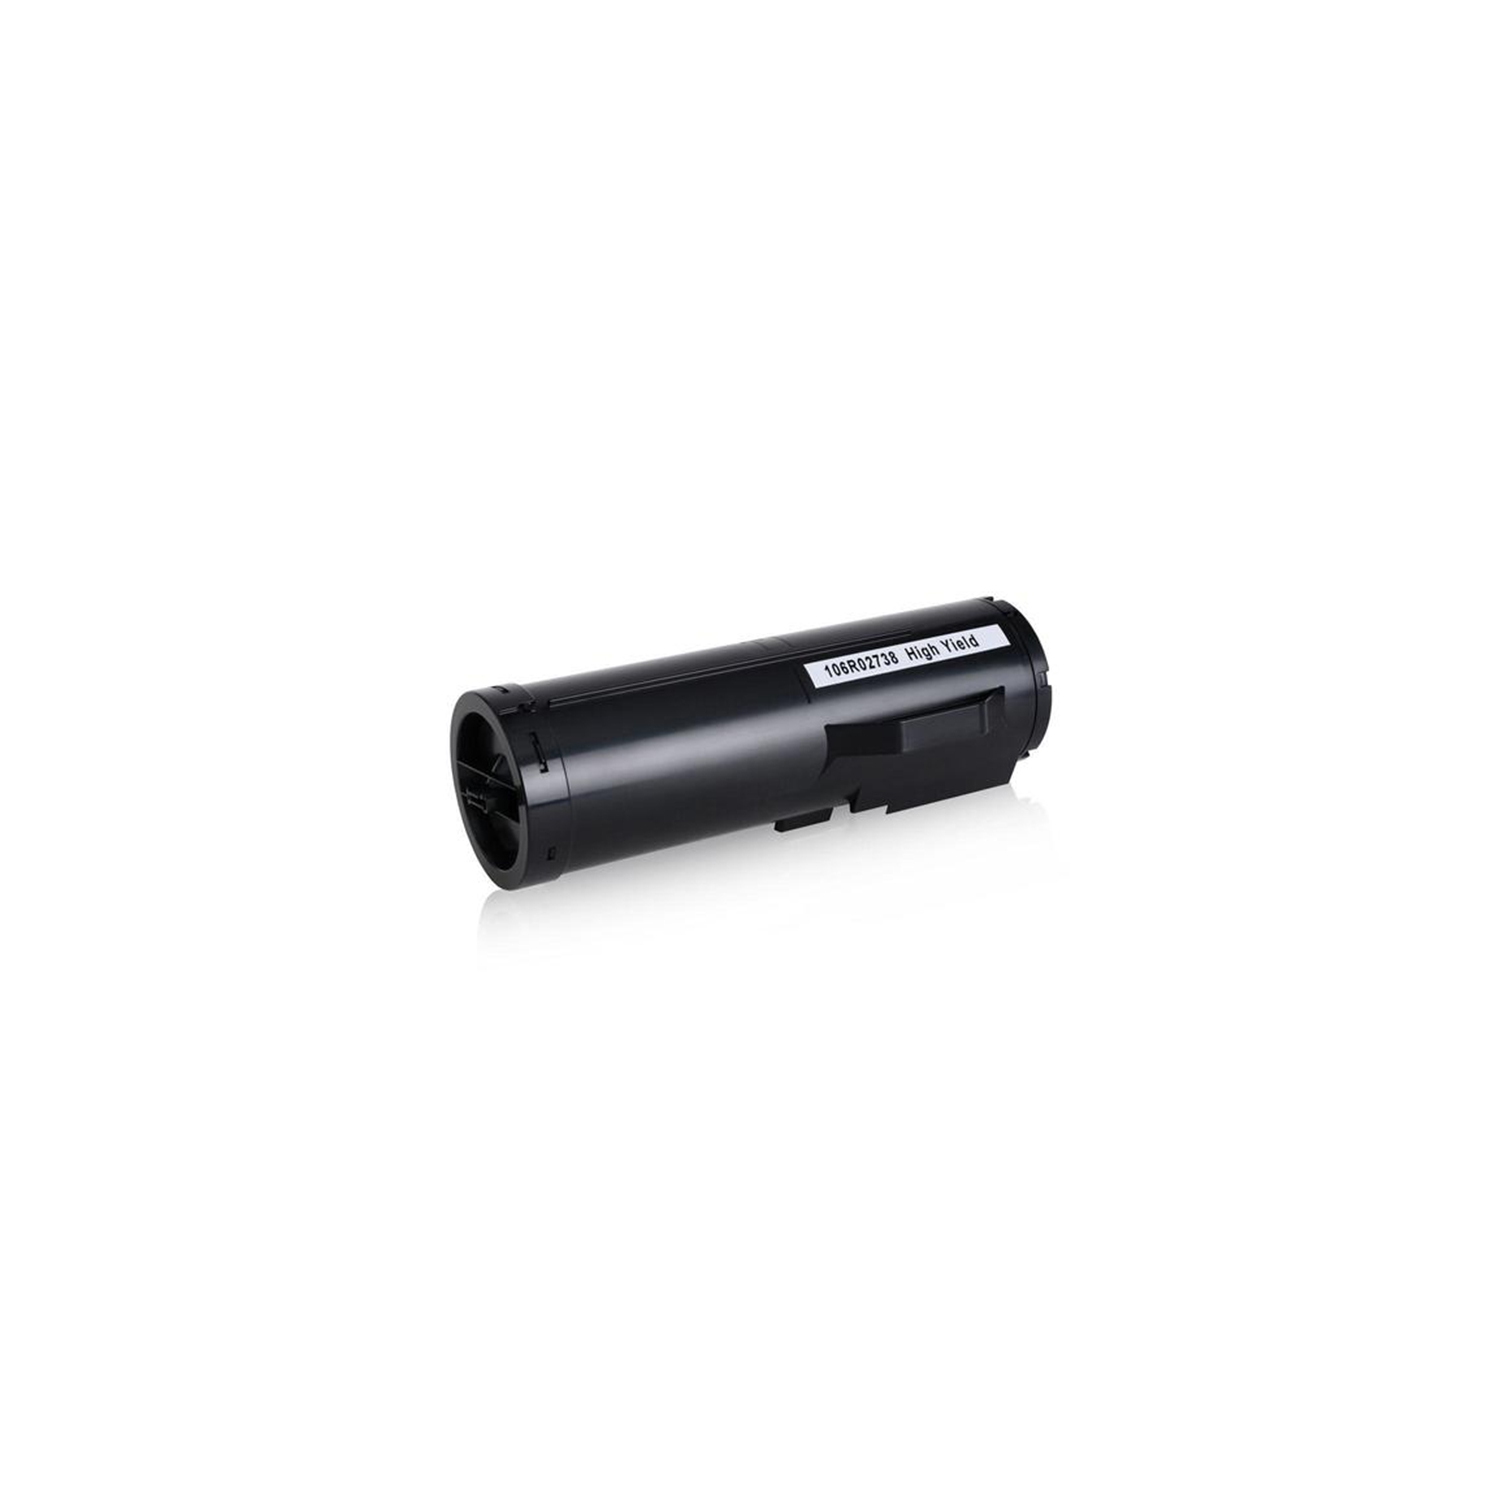 Ink House Generic Dell 593-BBKD P7RMX Black High Yield Toner Cartridge for use in E310dw E514dw E515dn E515dw